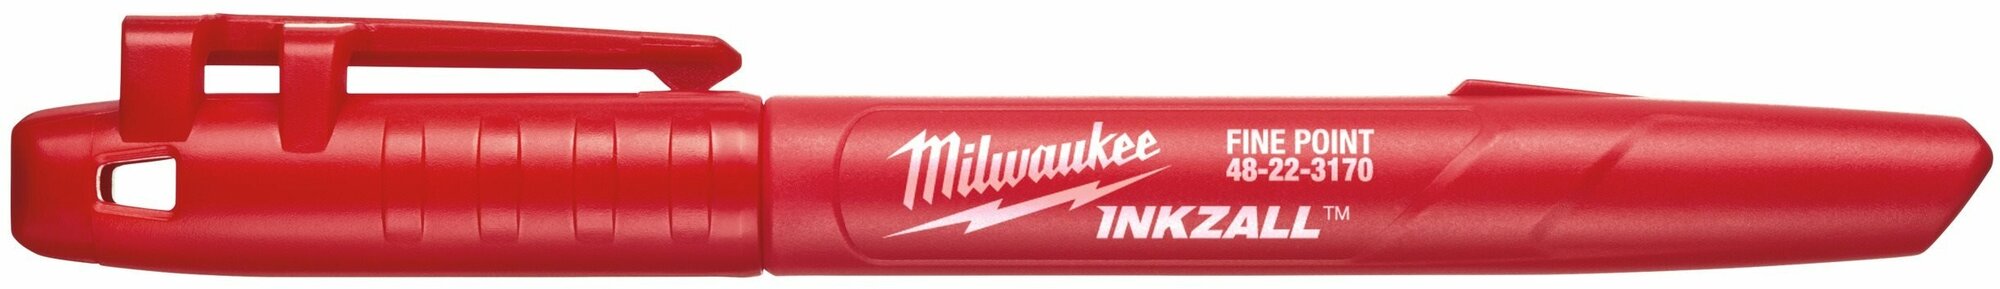 Маркер Milwaukee красный INKZALL для стройплощадки тонкий 1шт